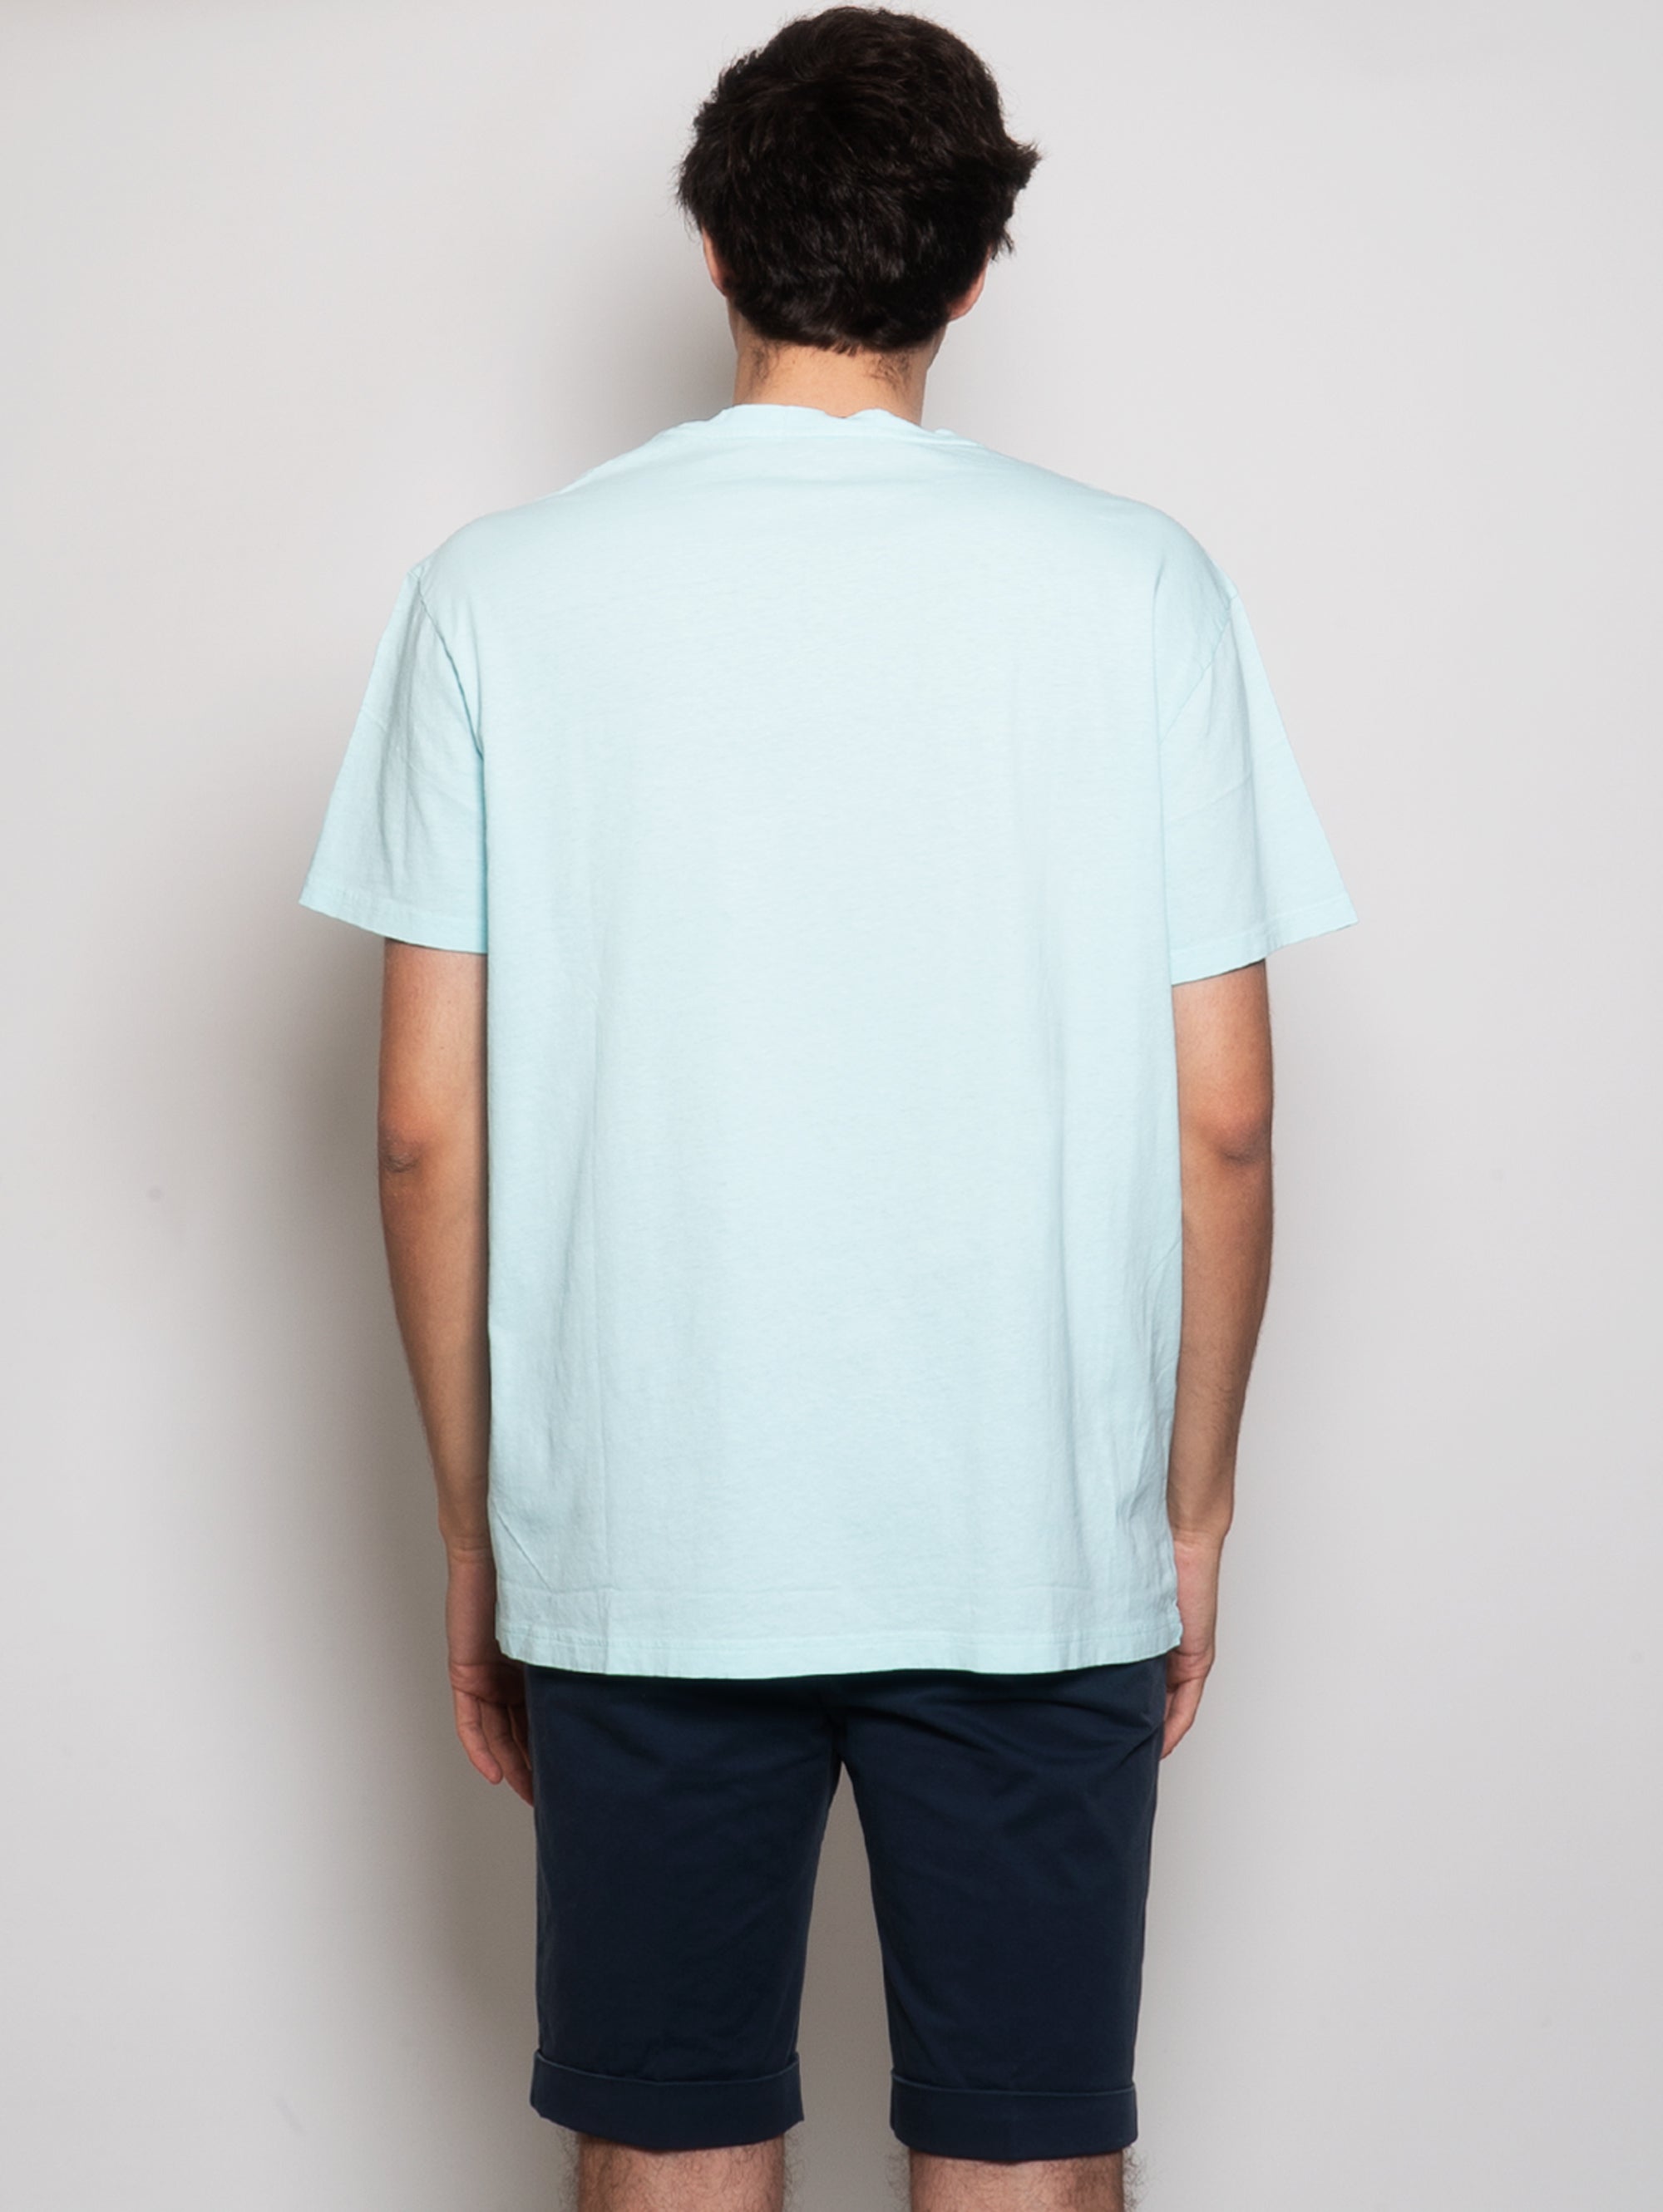 Cotton and Linen T-shirt with Aqua pocket